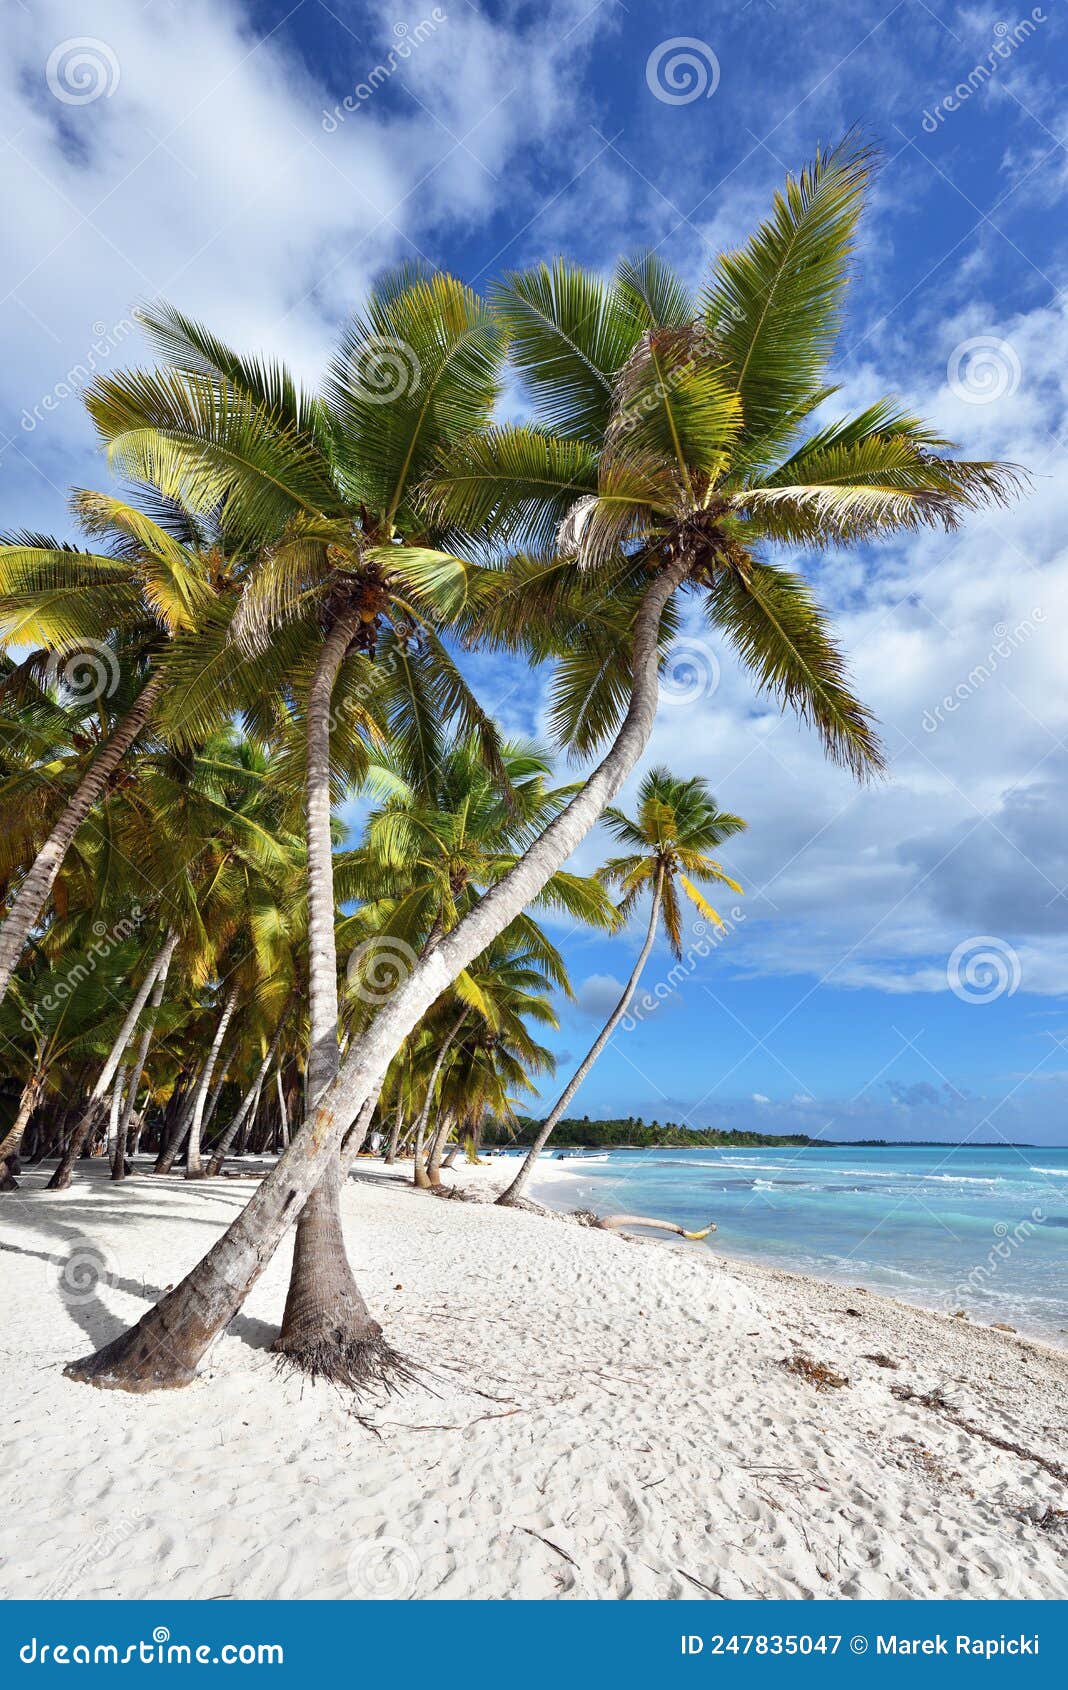 dominican republic, saona island - mano juan beach